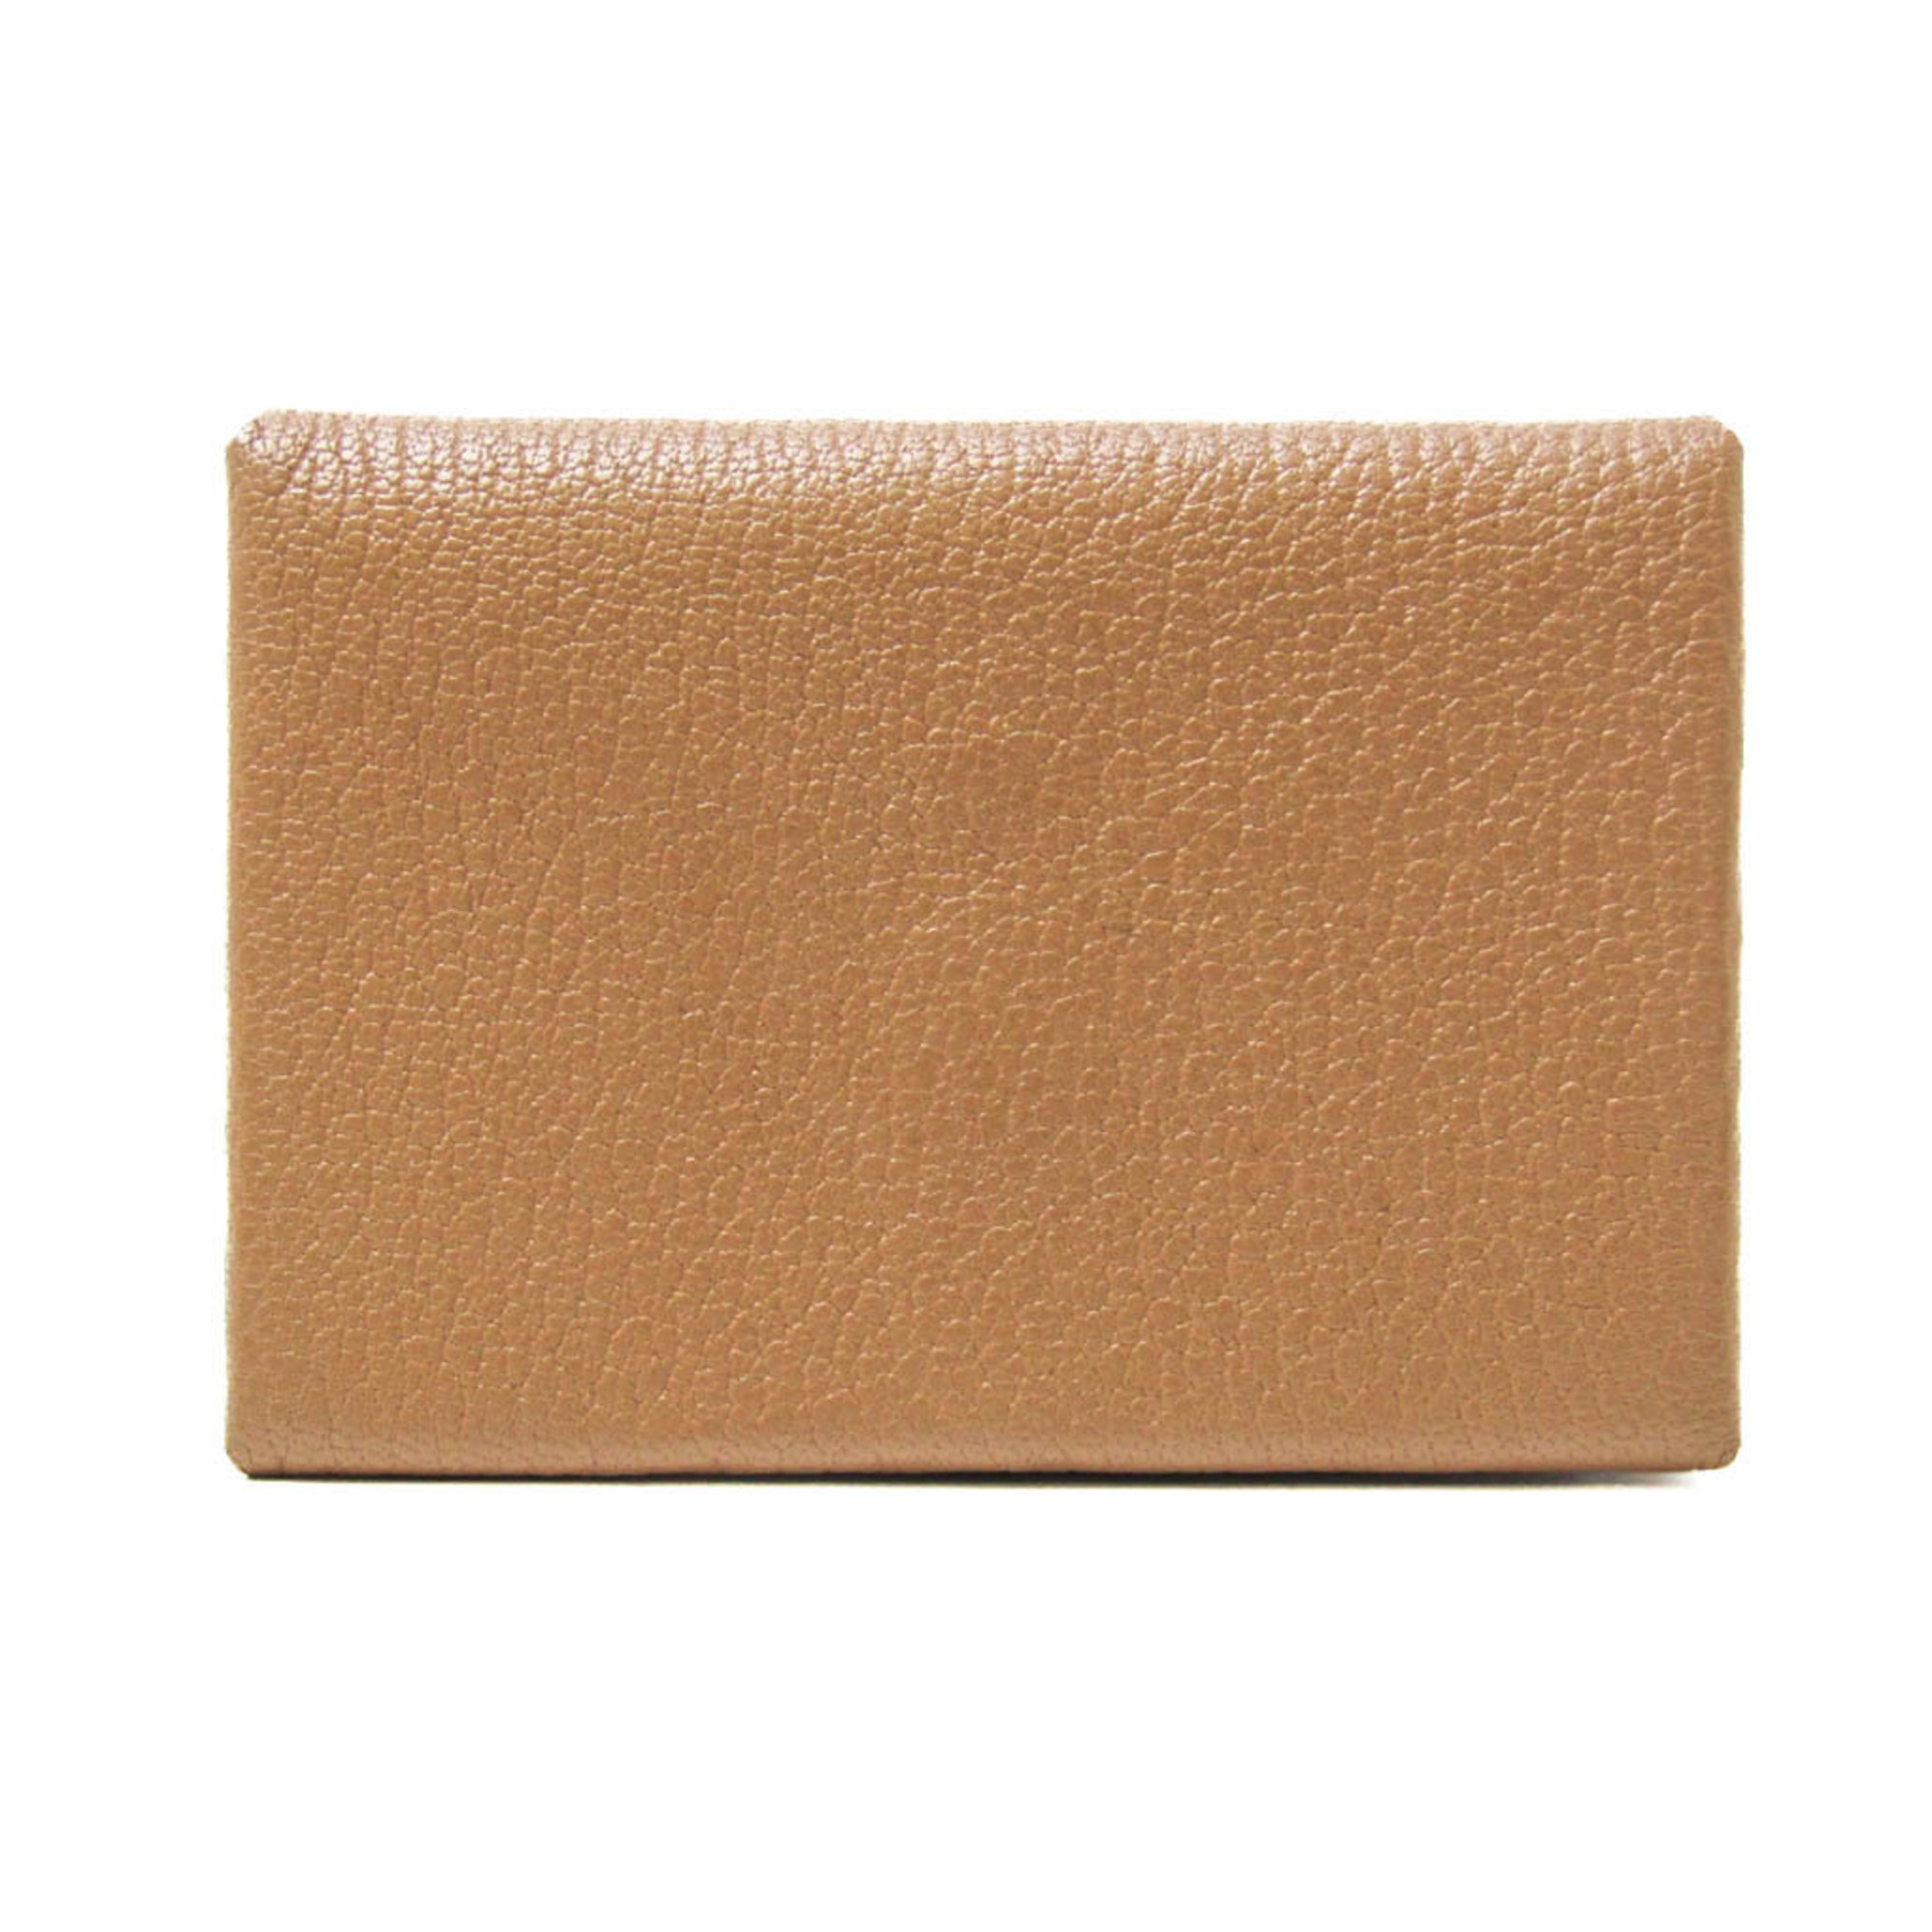 Hermes Calvi Duo Chevre Leather Card Case Light Brown